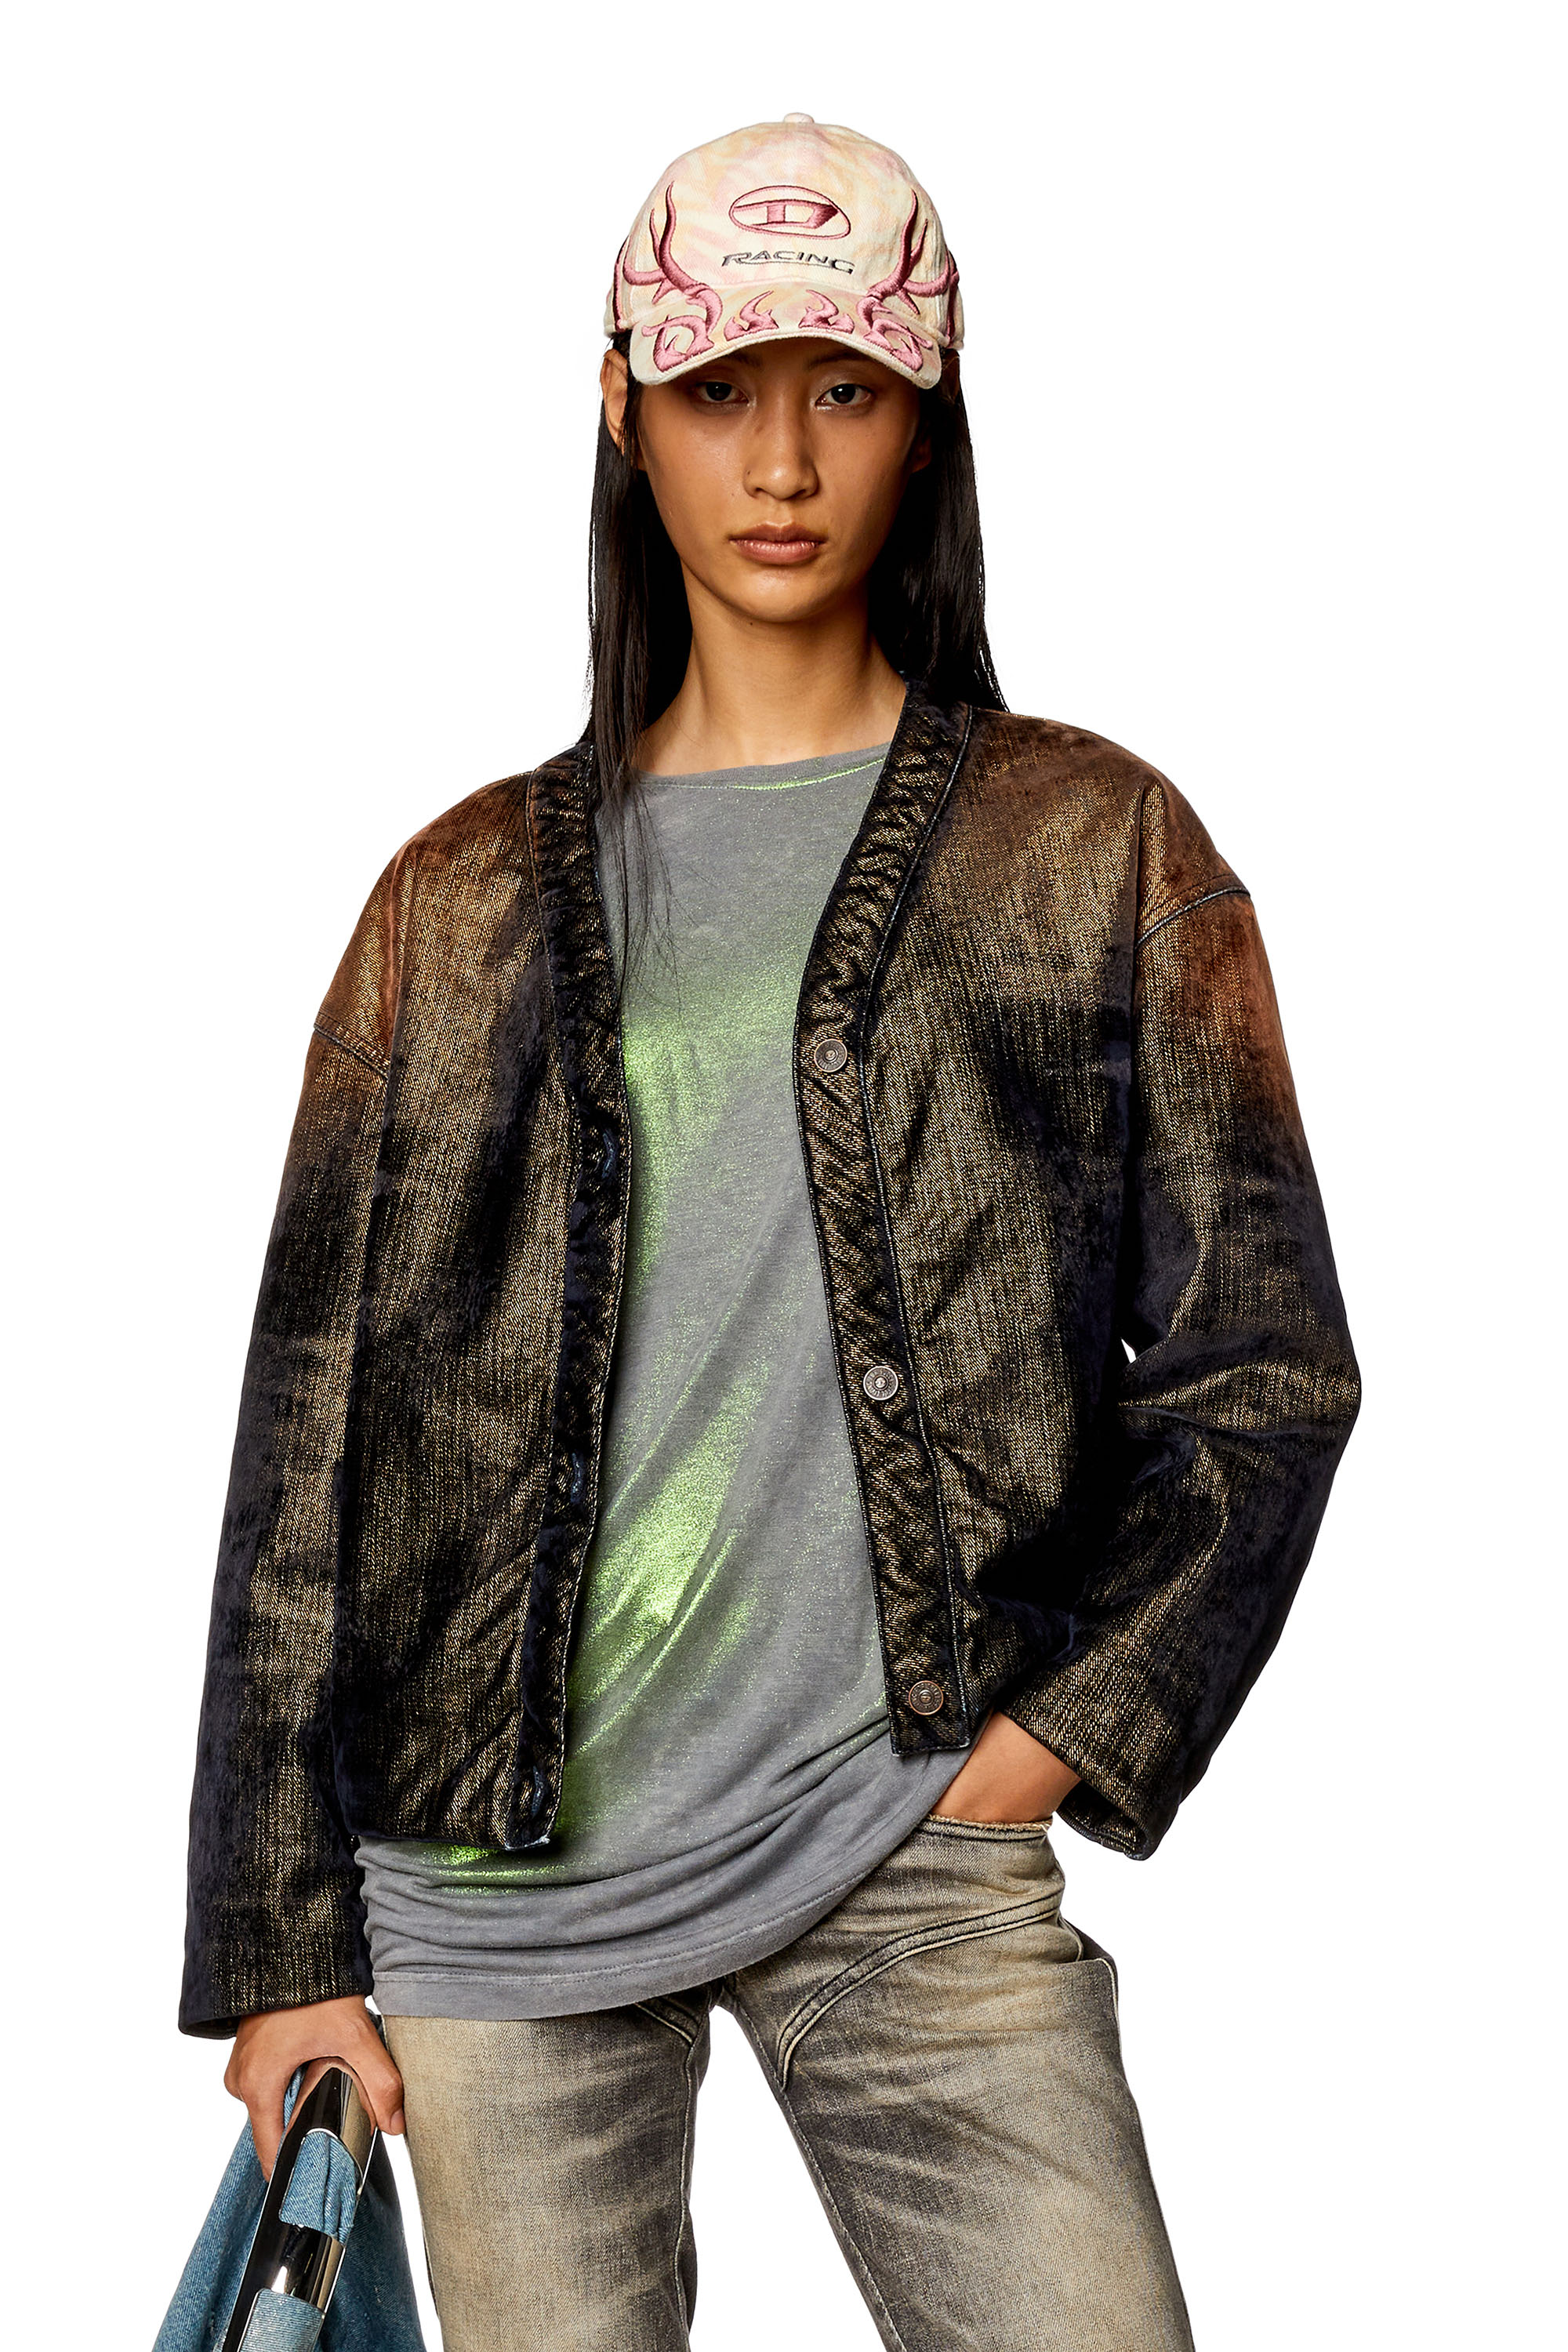 Diesel - DE-CONF-S, Woman Jacket in shimmery denim in Multicolor - Image 1